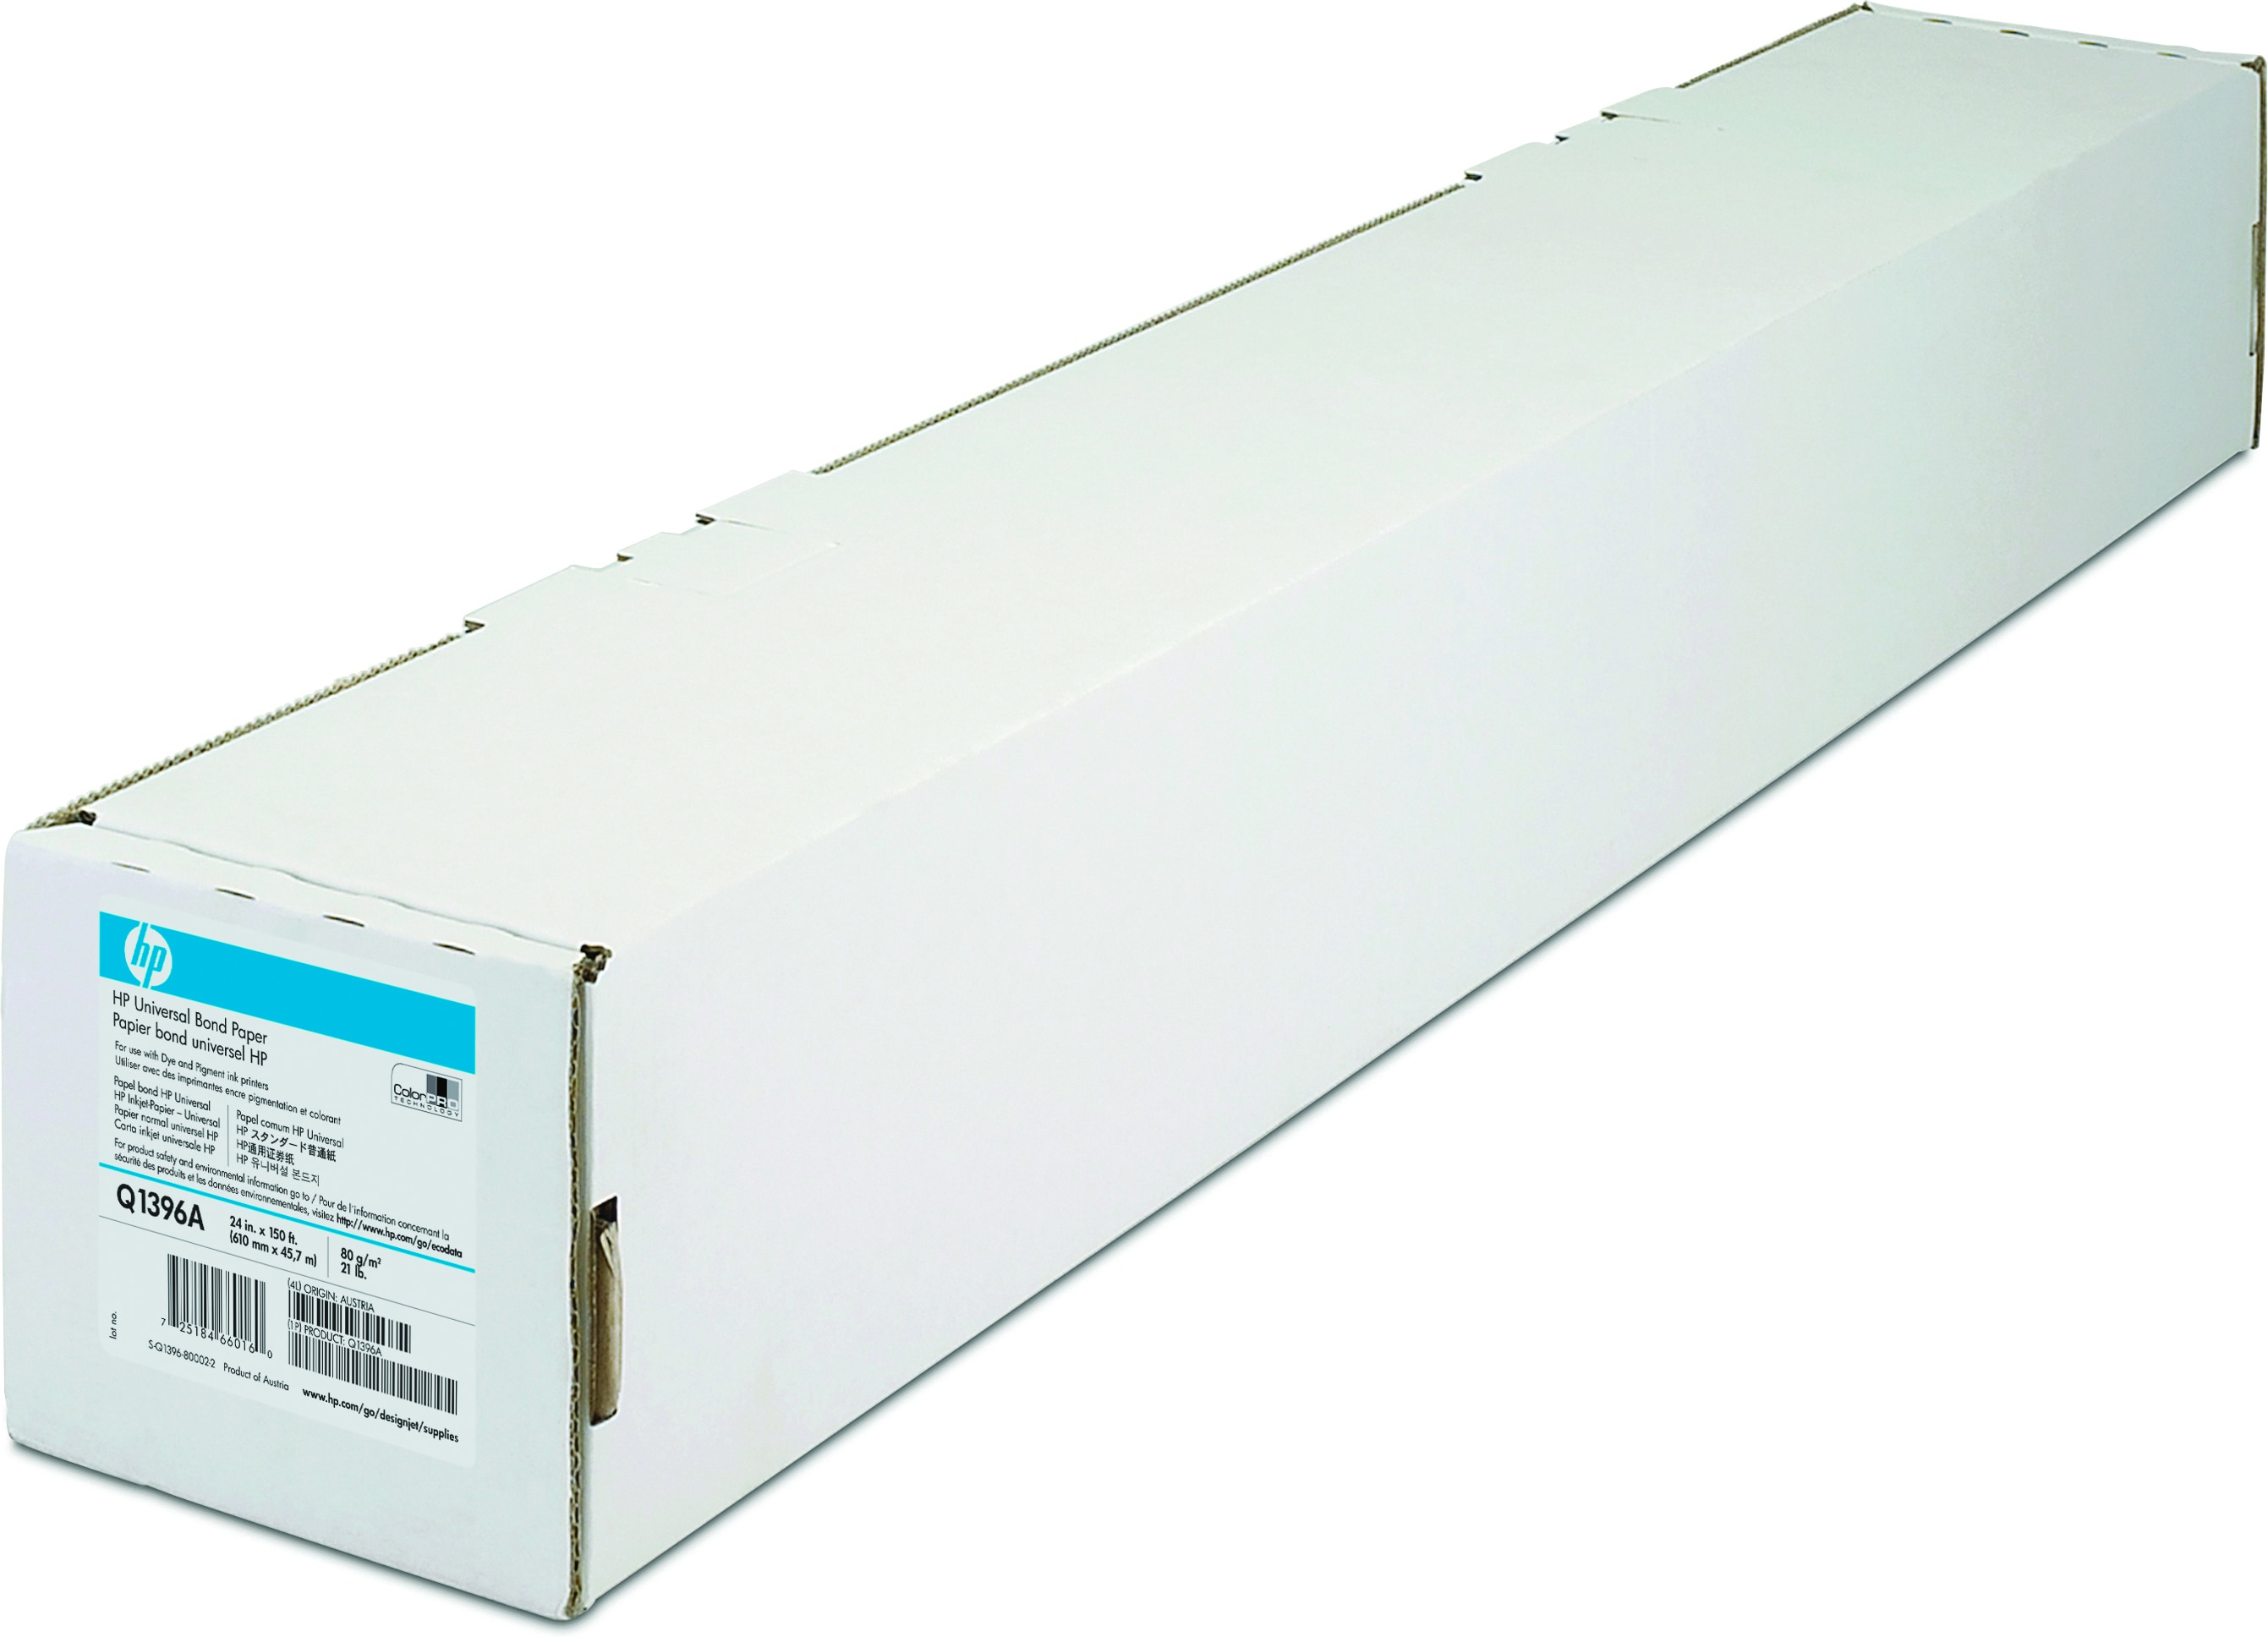 HP Hp Bond Paper White Inkjet 80g/m2 610mm X 45.7m 1 Roll - Q1396a Q1396a - AD01